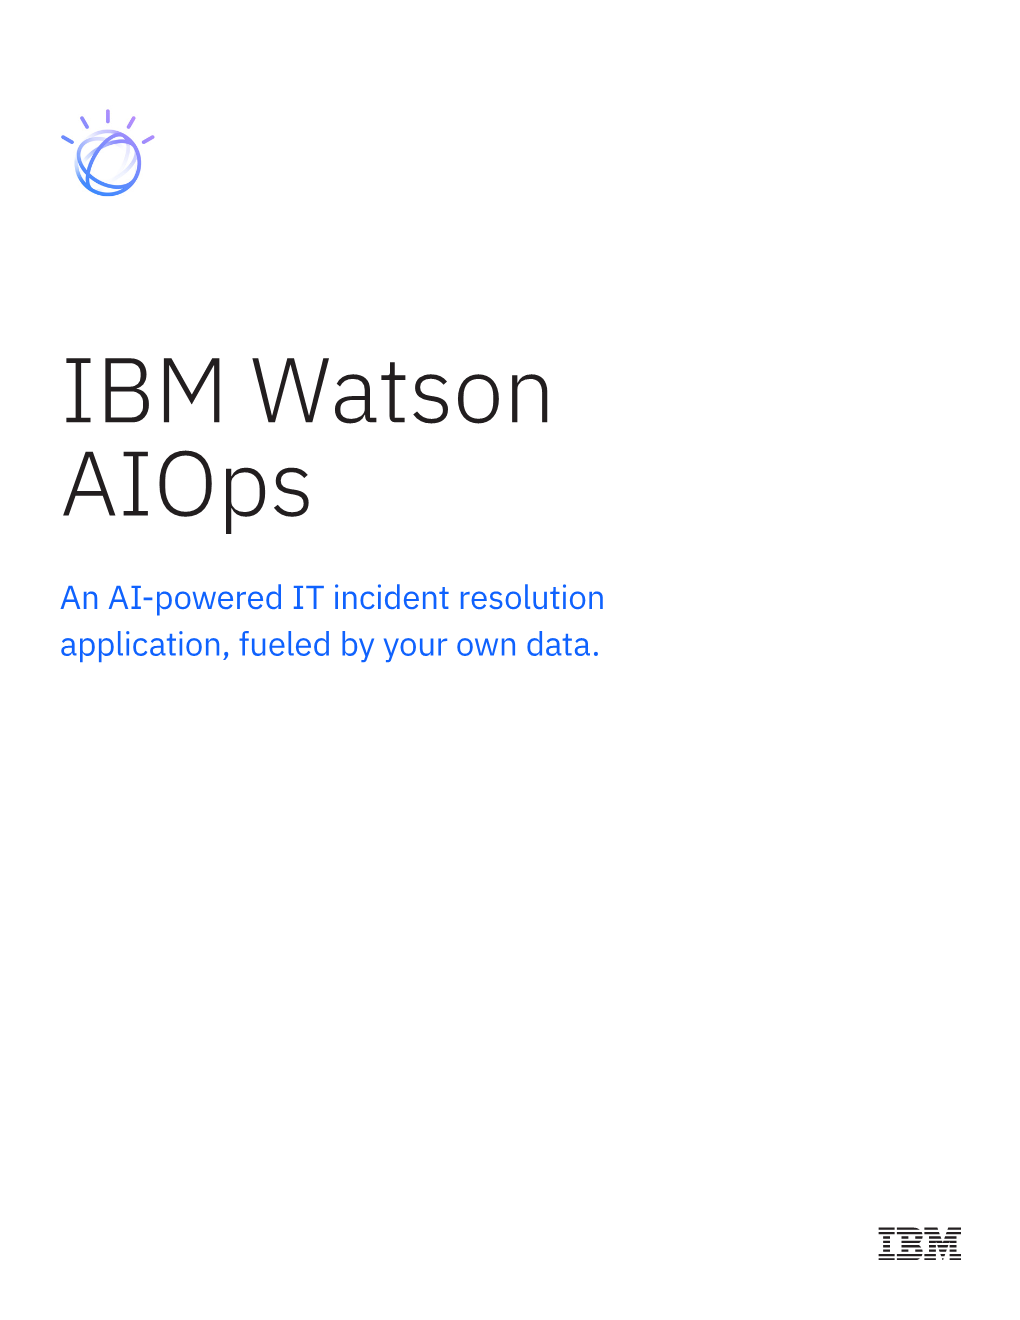 IBM Watson Aiops